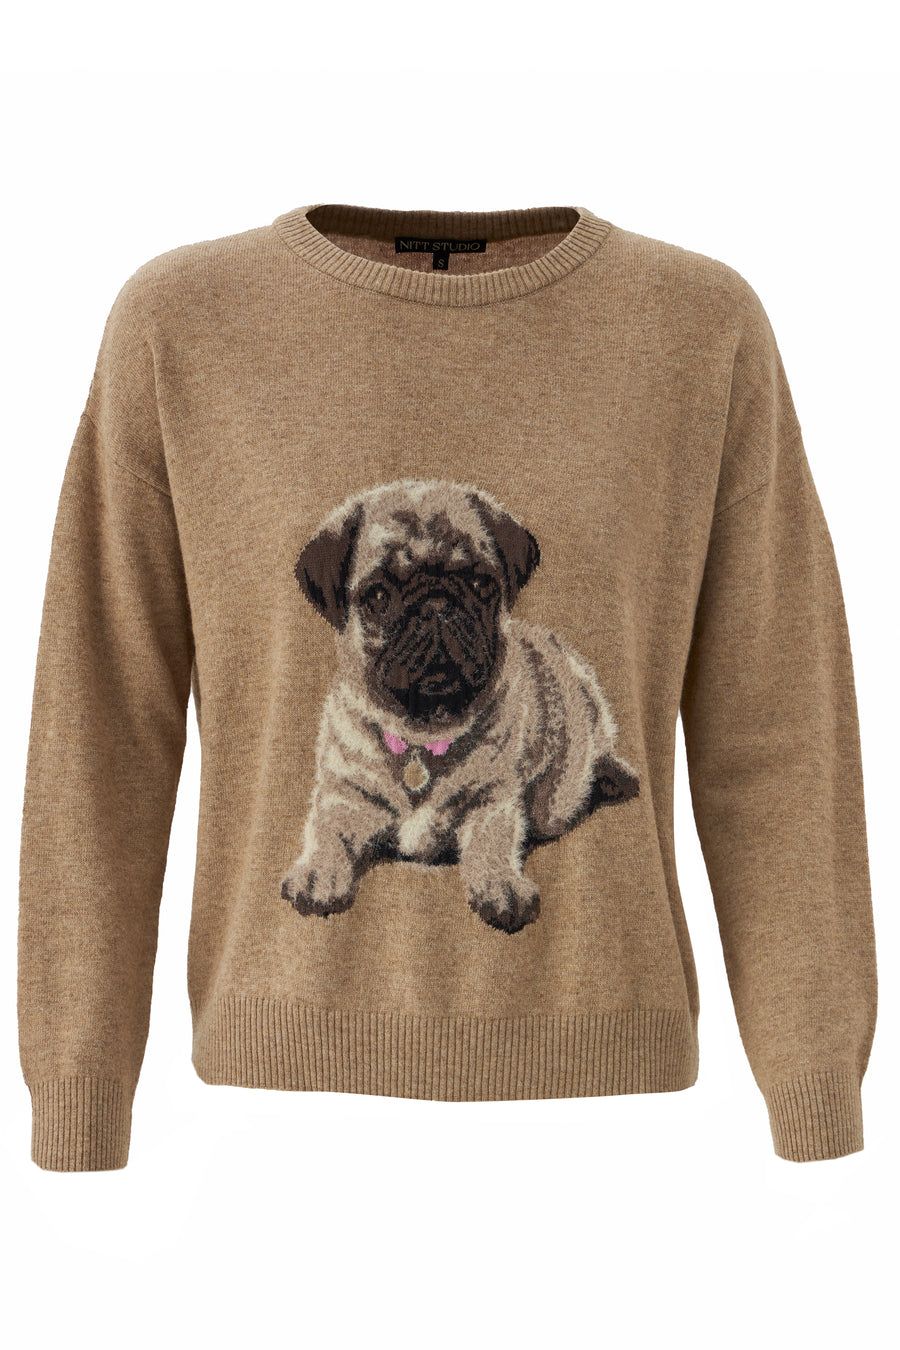 Tina Women's Intarsia Lambswool Sweater with Pug Detail